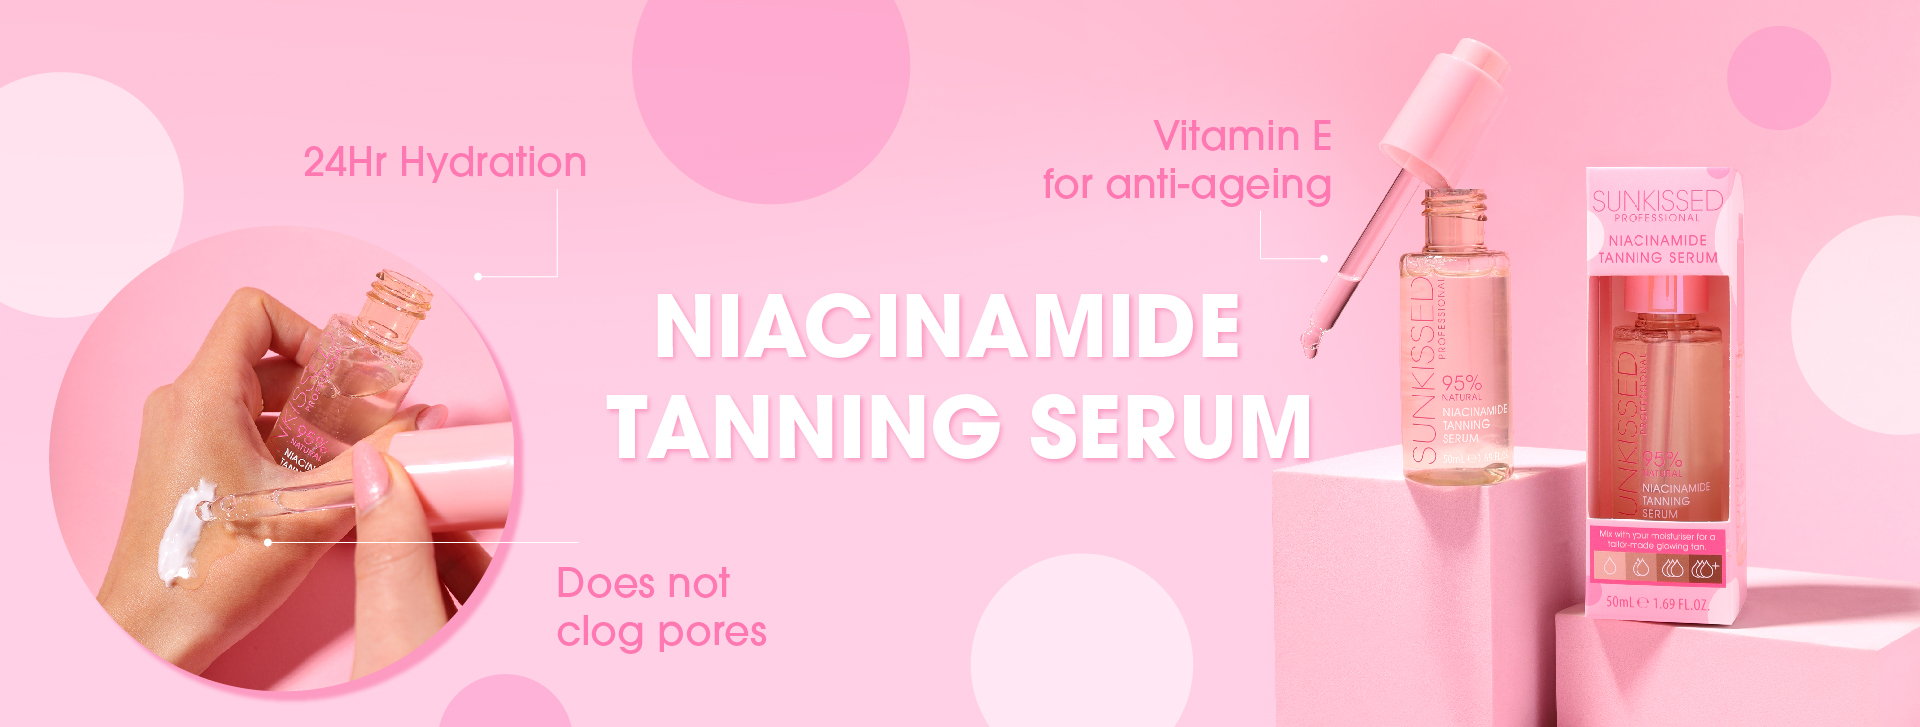 https://www.sunkissedbronzing.co.uk/sunkissed-professional-niacinamide-tanning-serum.html